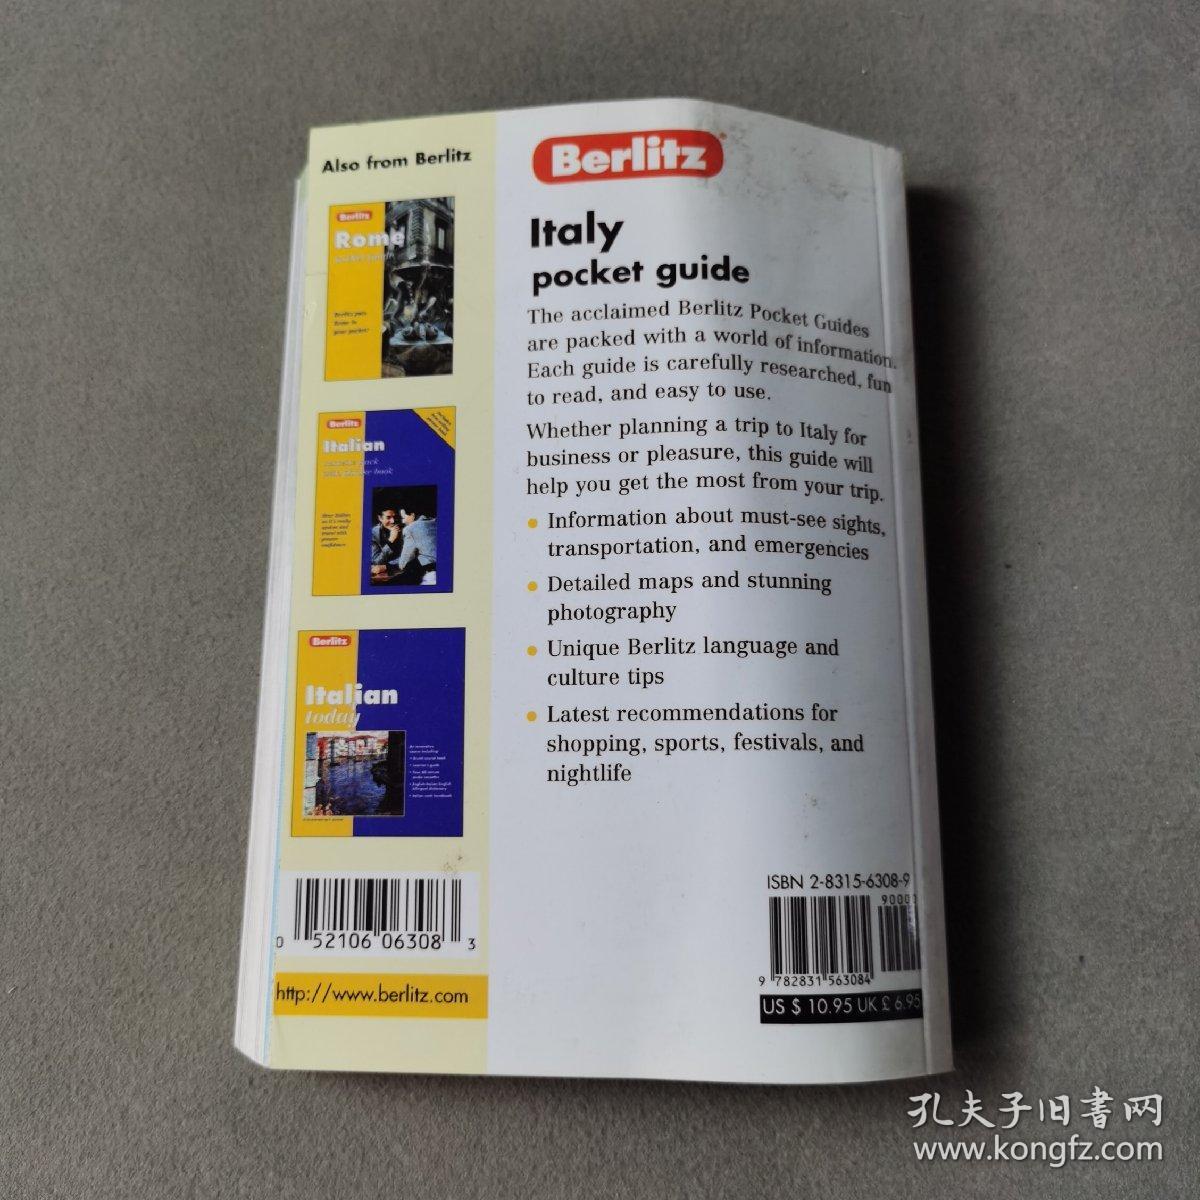 Italy pocket guide【英文】